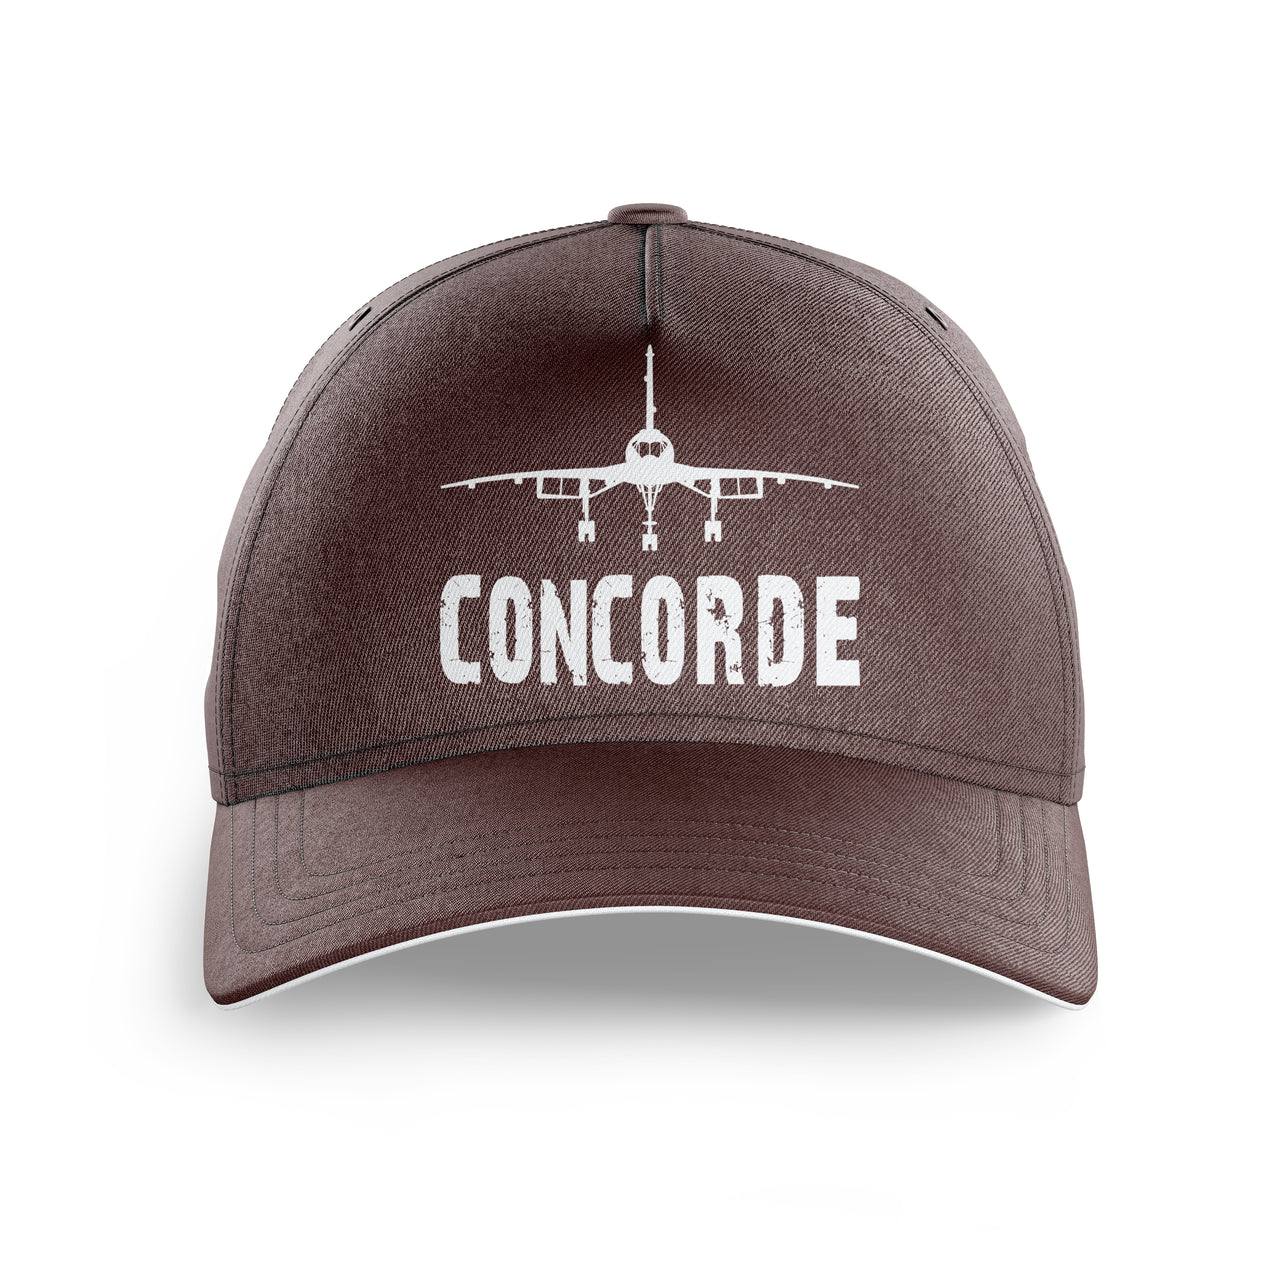 Concorde & Plane Printed Hats